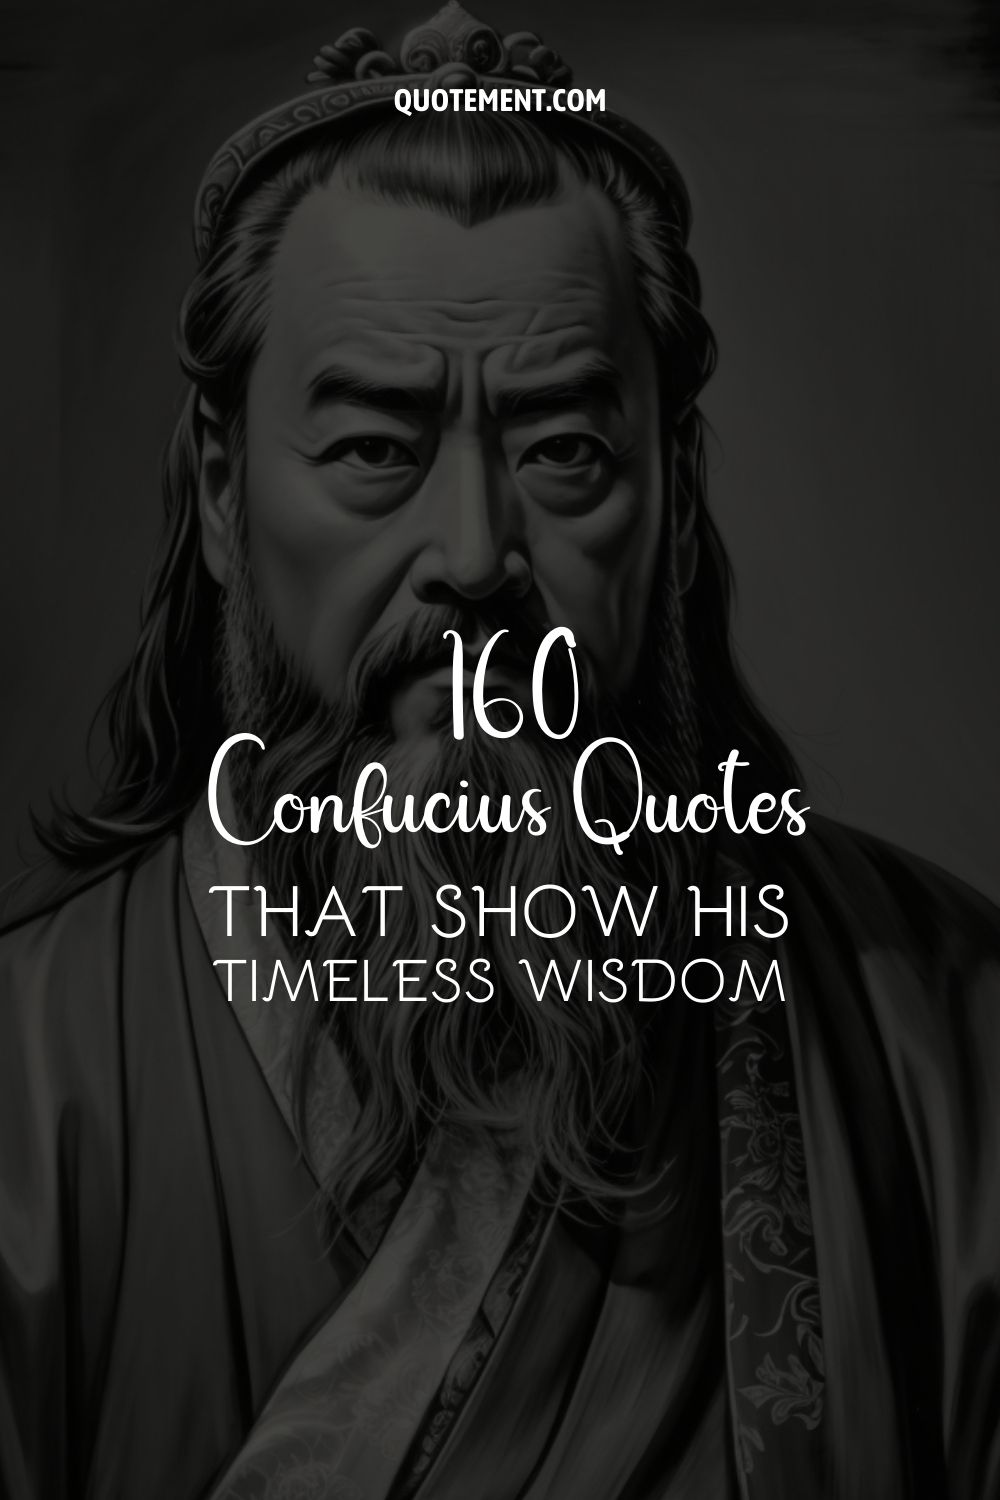 160 Confucius Quotes That Show His Timeless Wisdom
